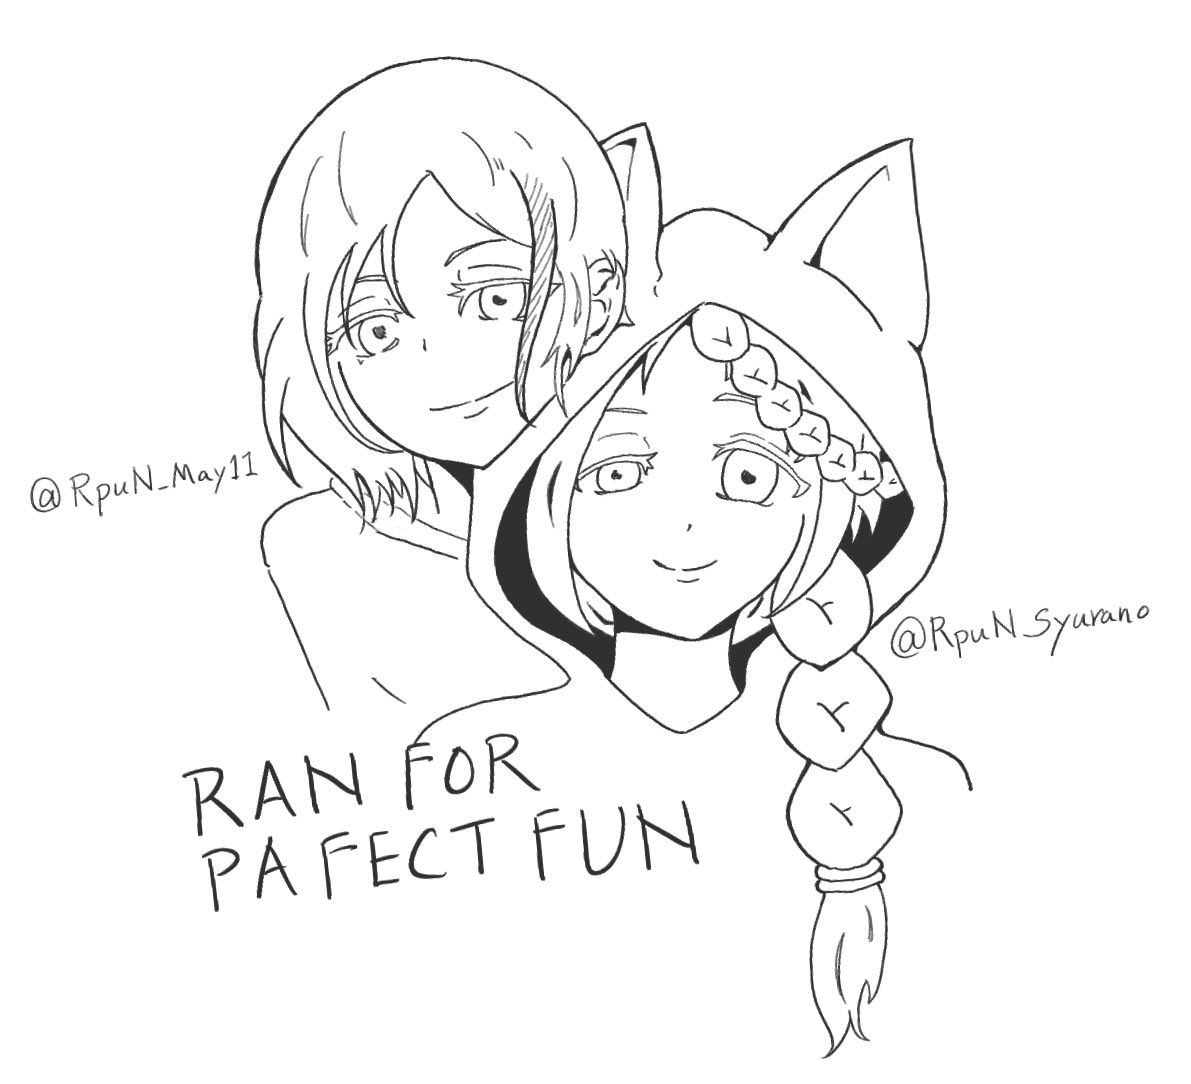 RAN FOR PAFECT FUNのお二人描きました！！
@RpuN_May11 
@RpuN_Syurano